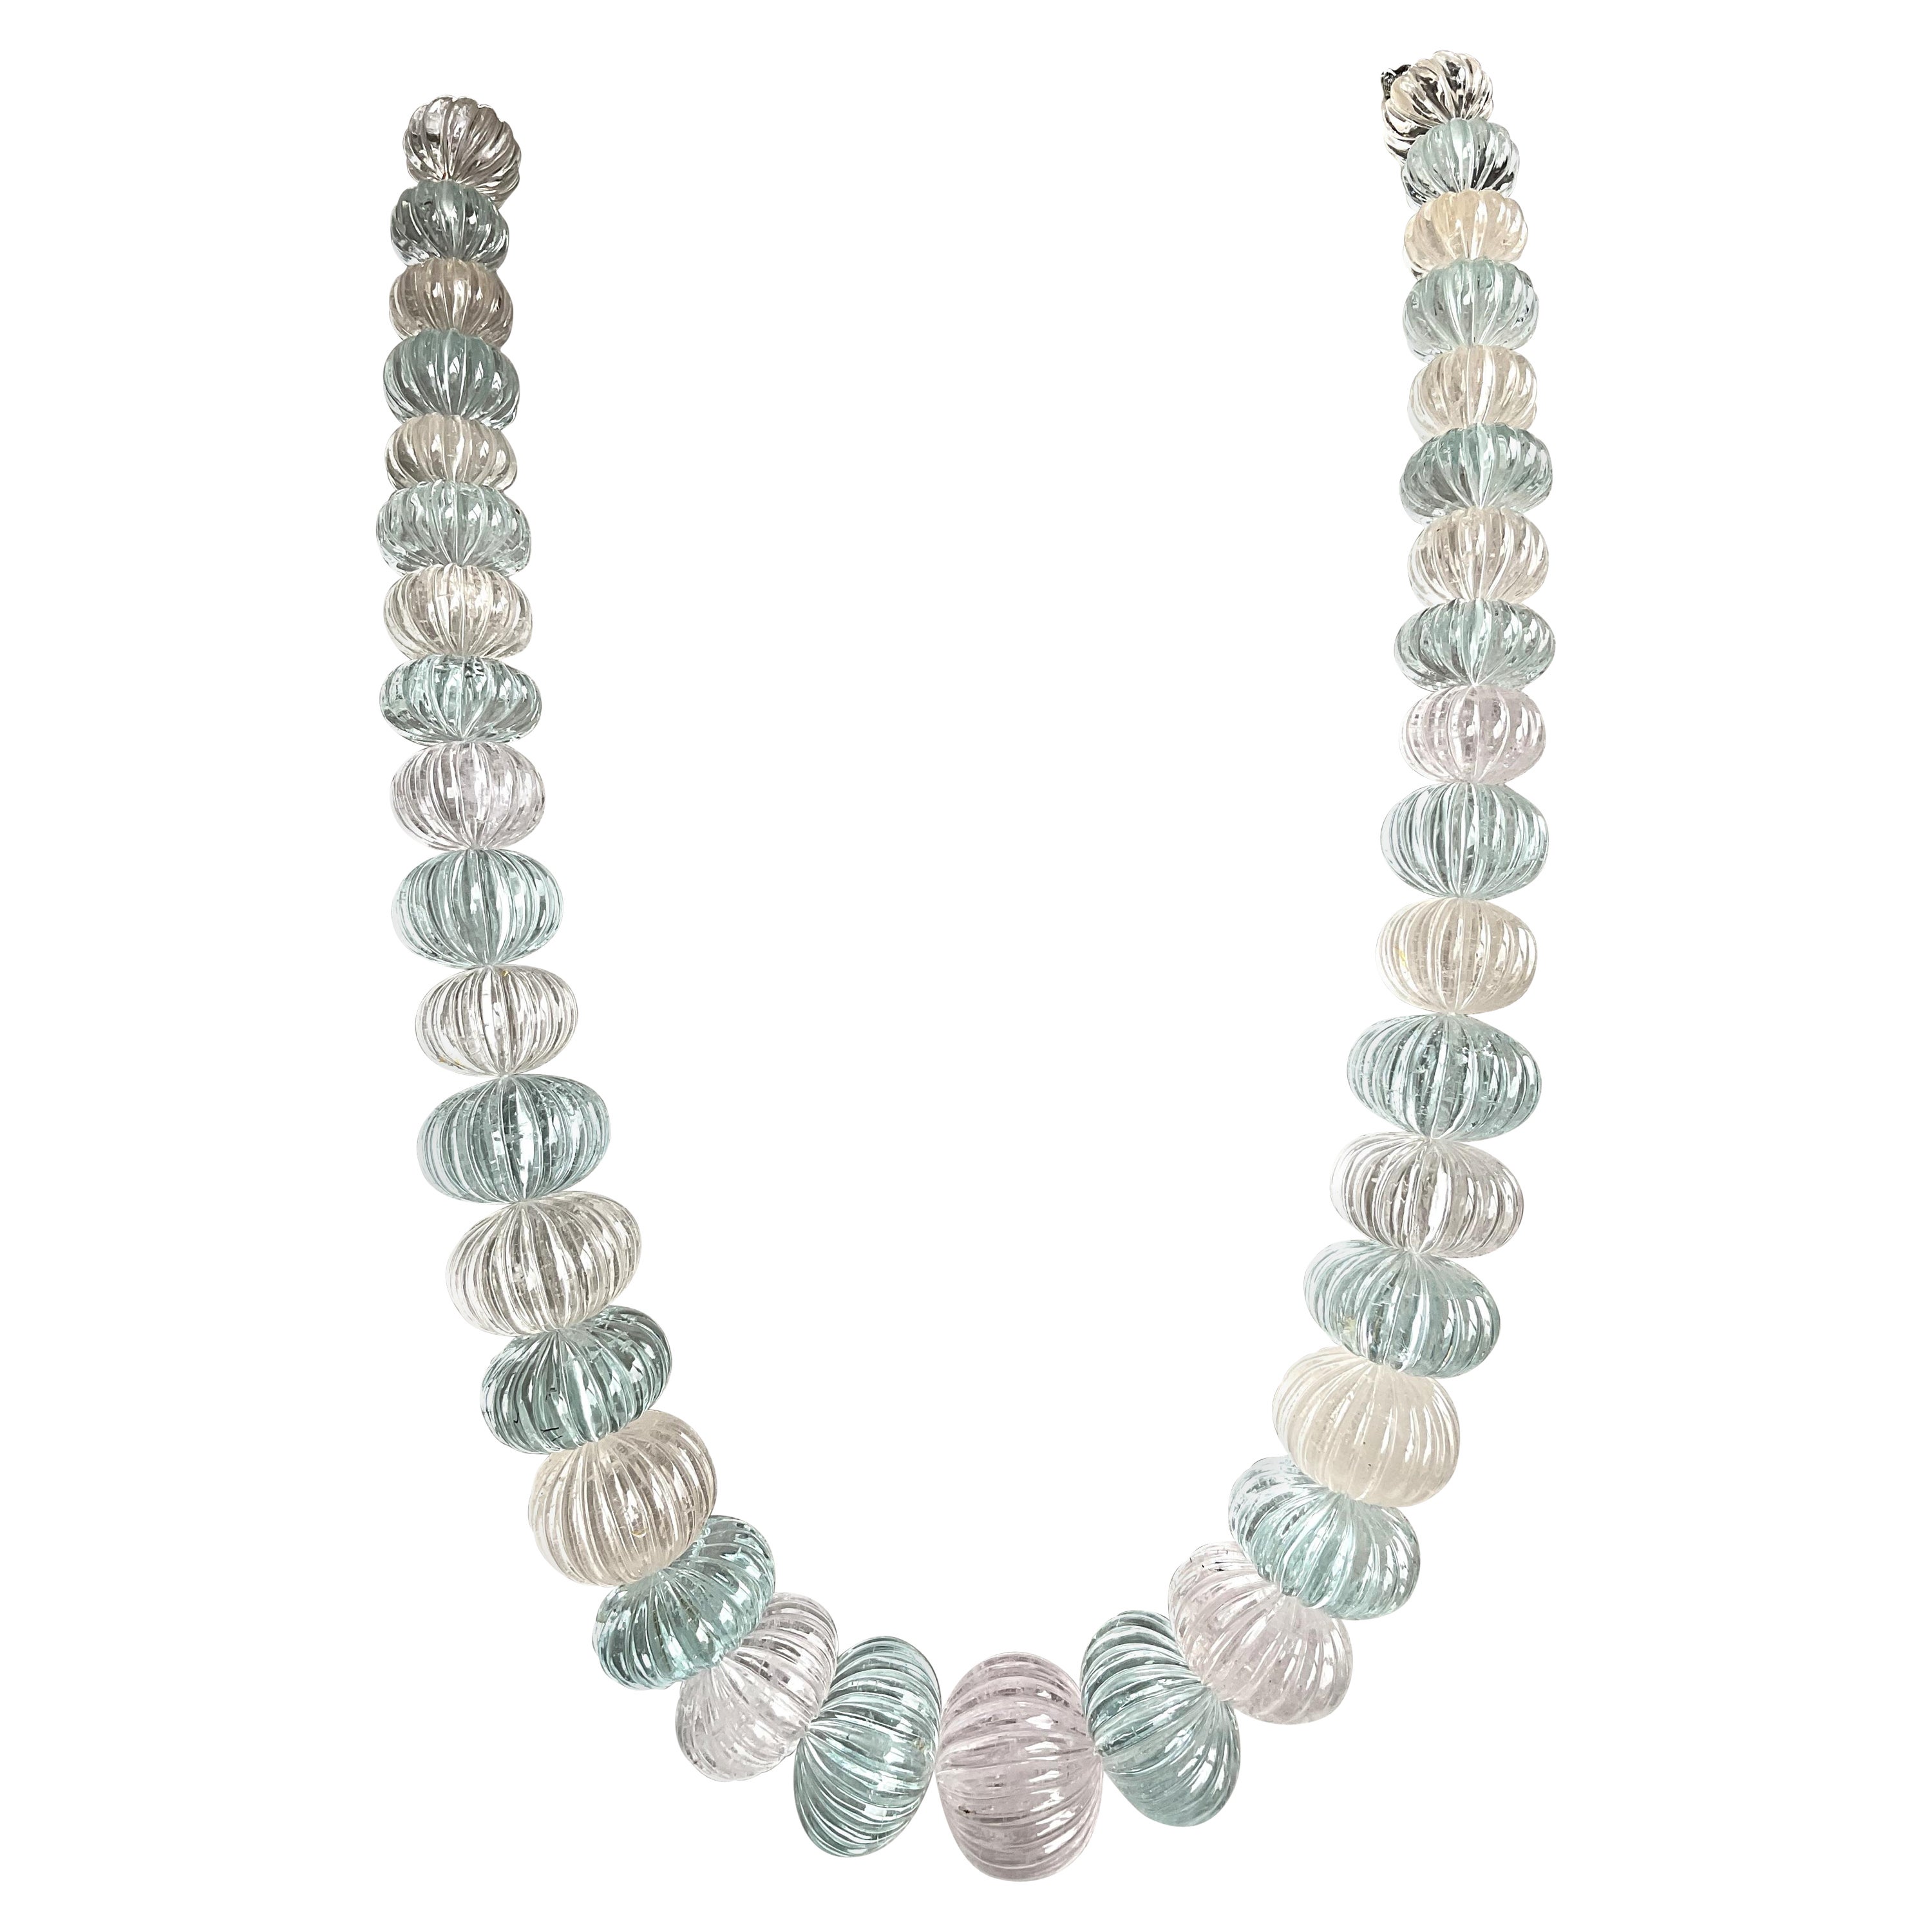 1768.53 Carats grand Aquamarine & Morganite beryl fluted gems beads Necklace  For Sale